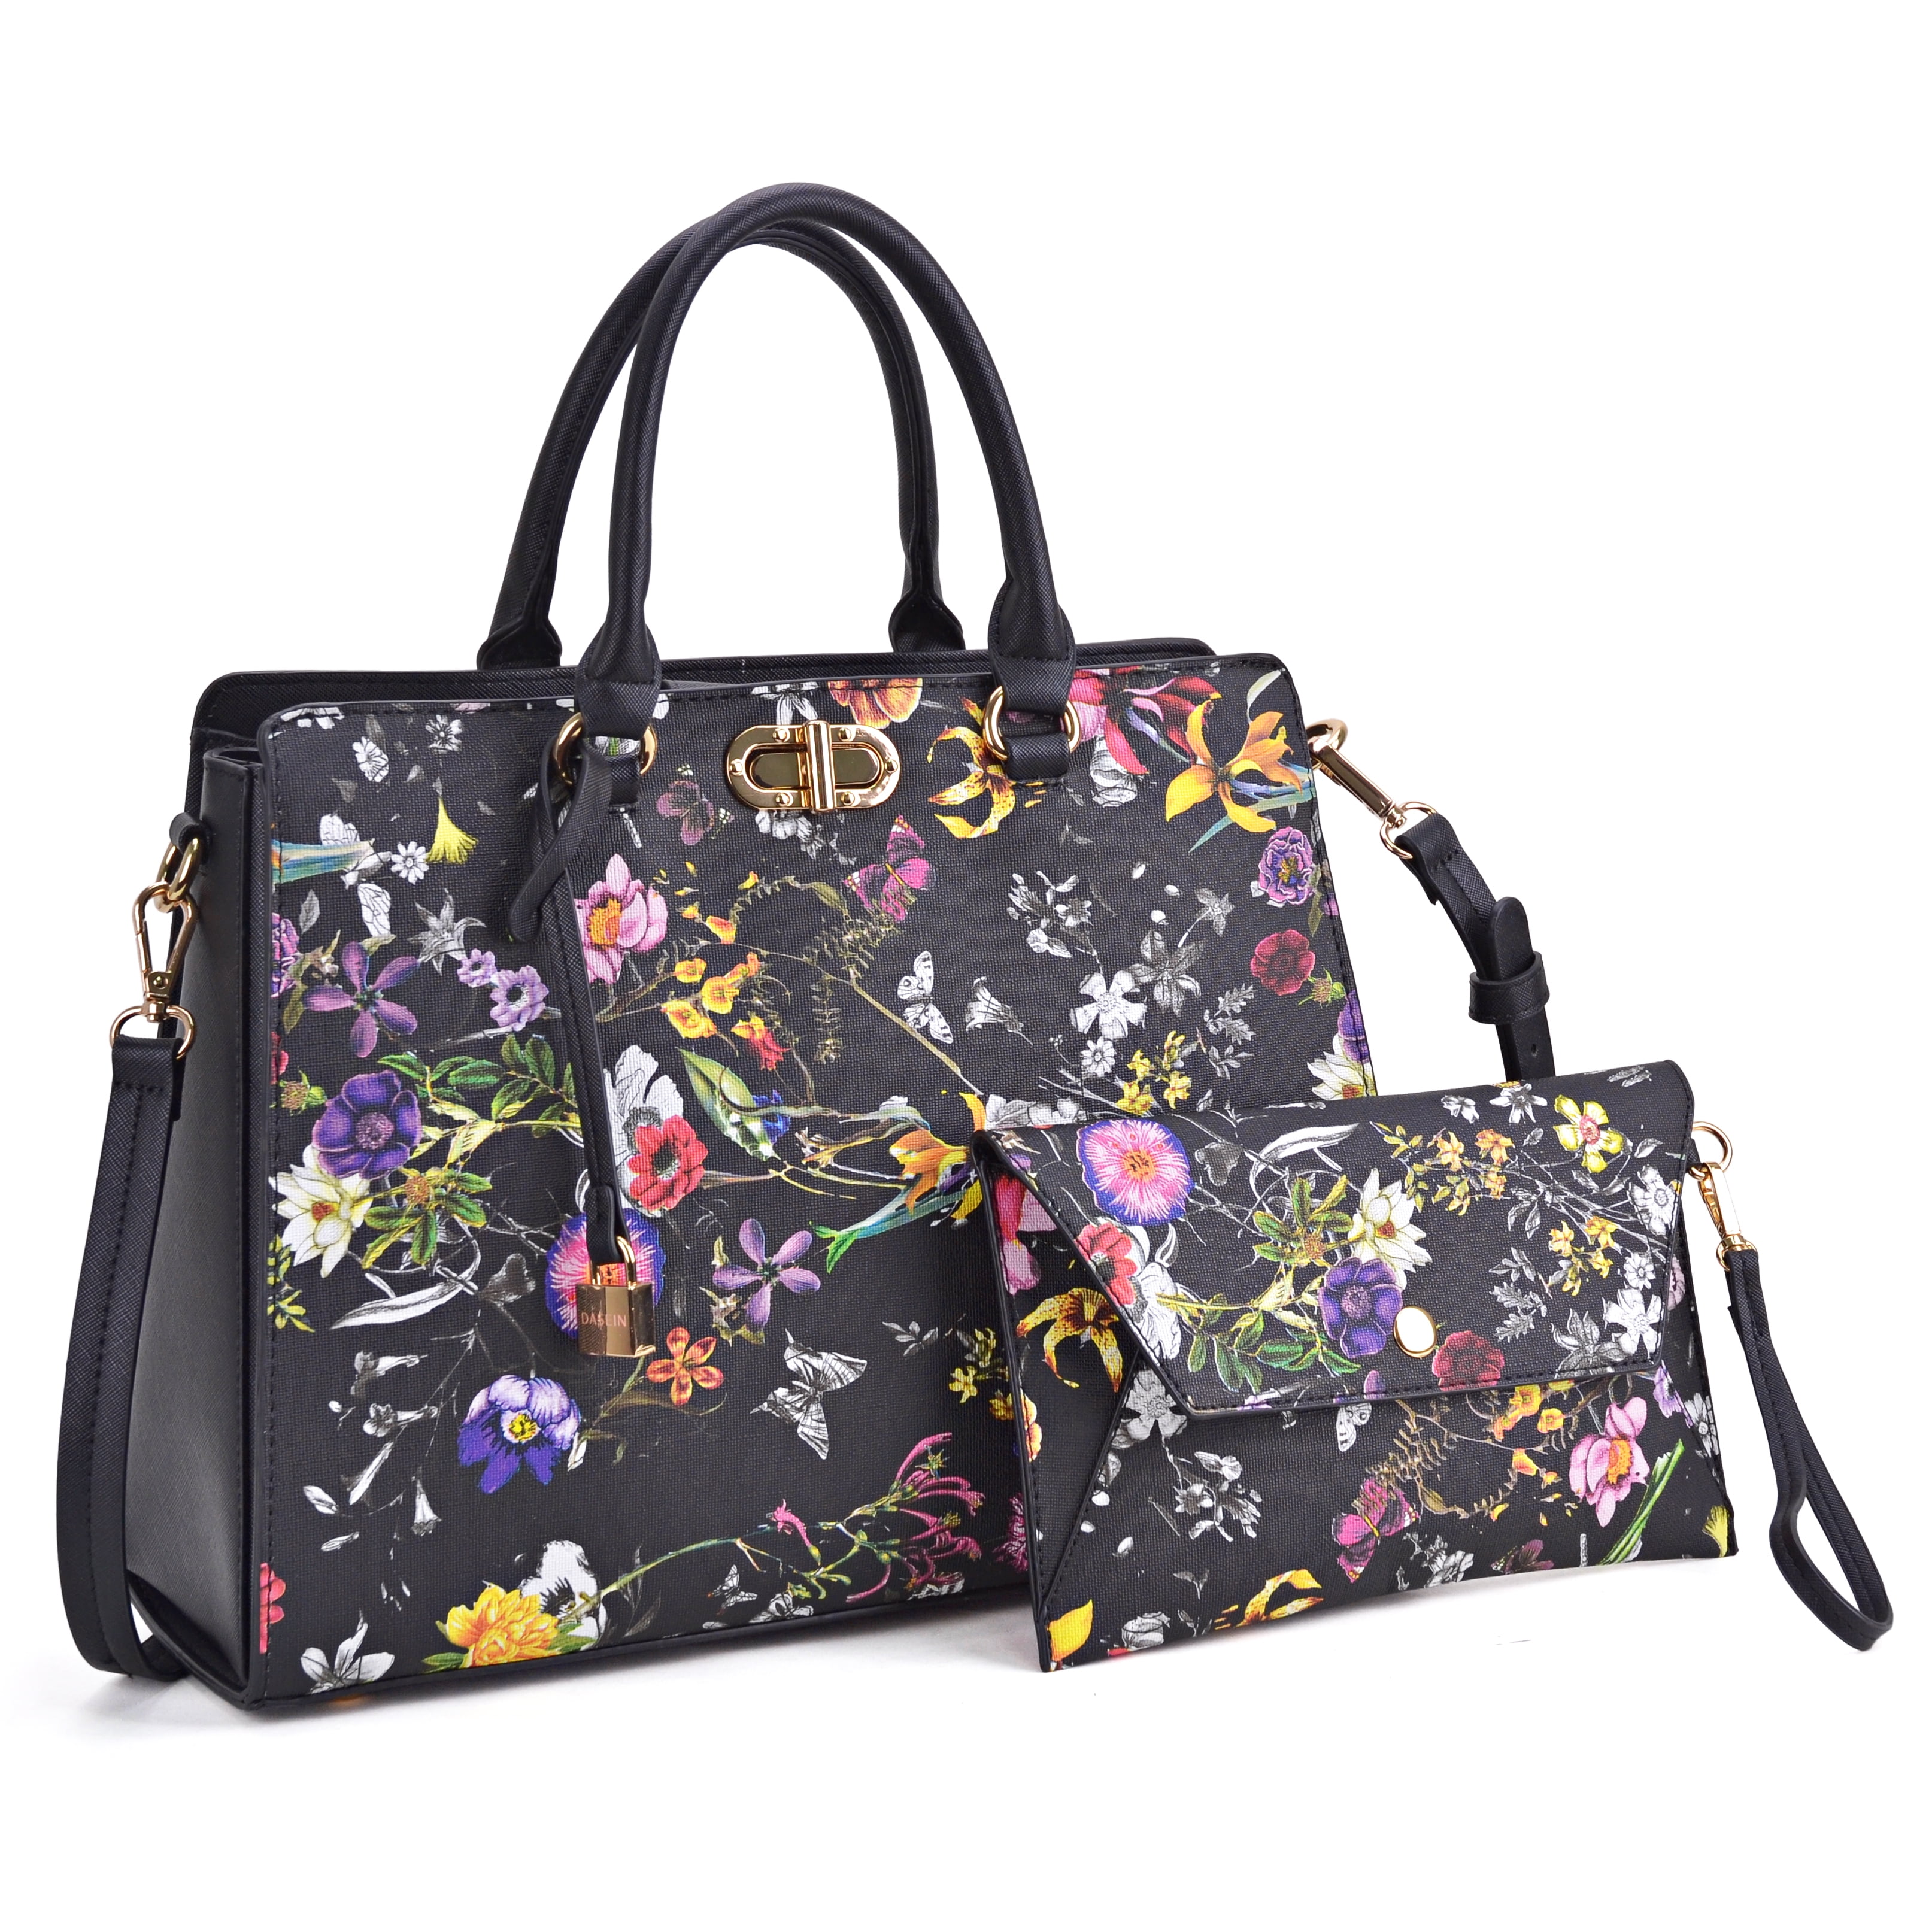 Dasein Women Handbags Fashion Satchel Purses Top Handle Tote Work Bags ...